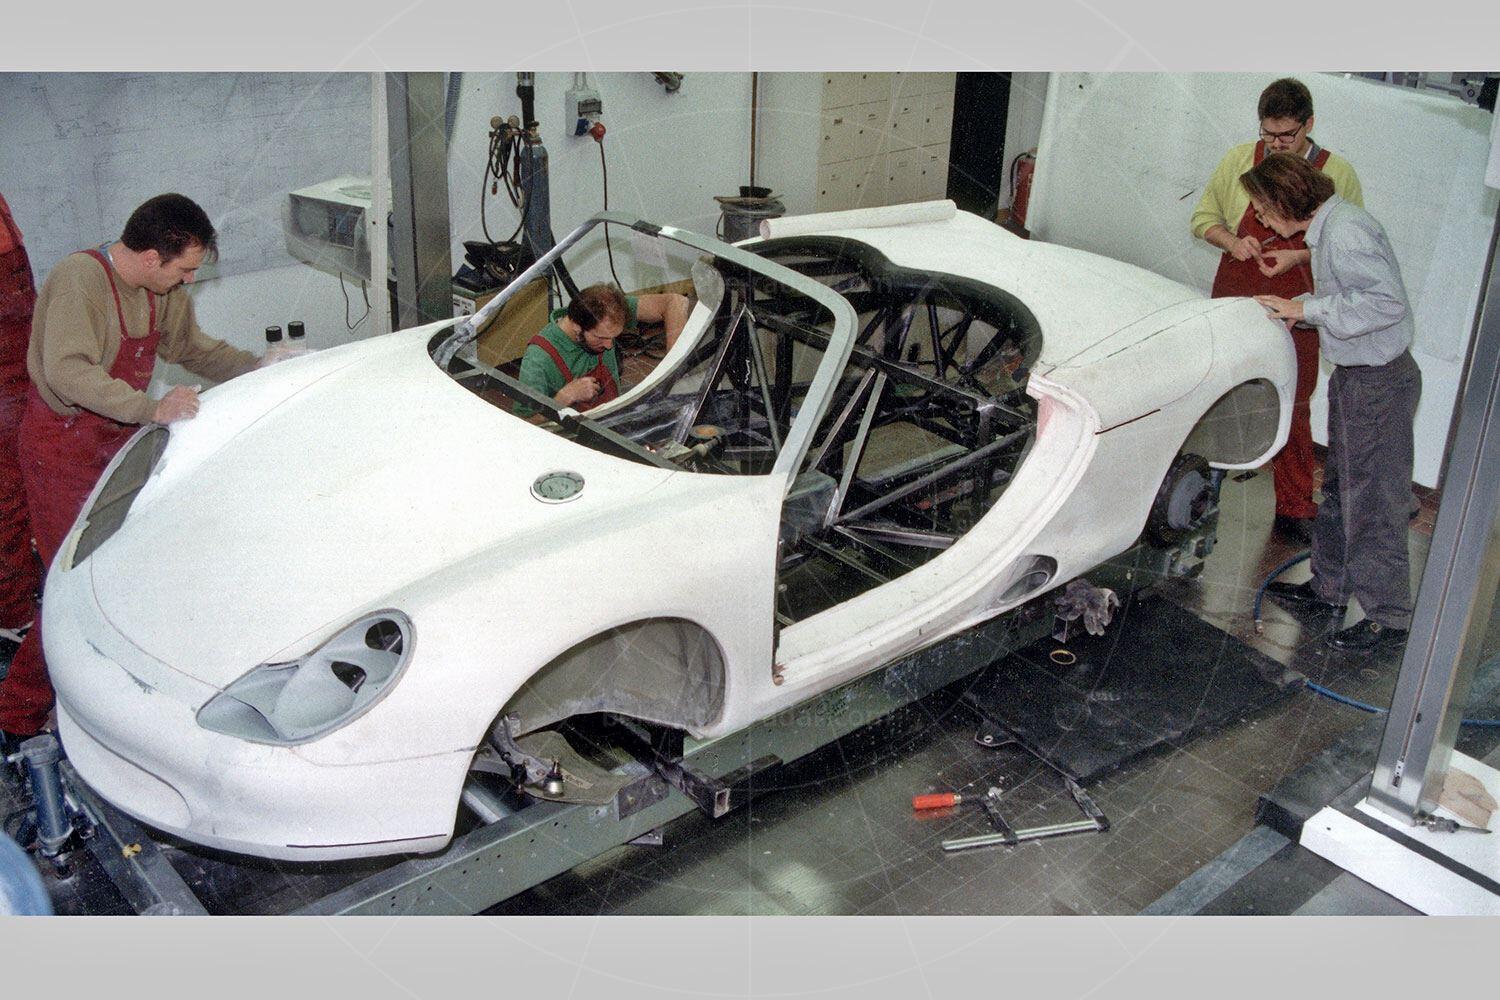 Porsche Boxster concept being built Pic: Porsche | Porsche Boxster concept being built